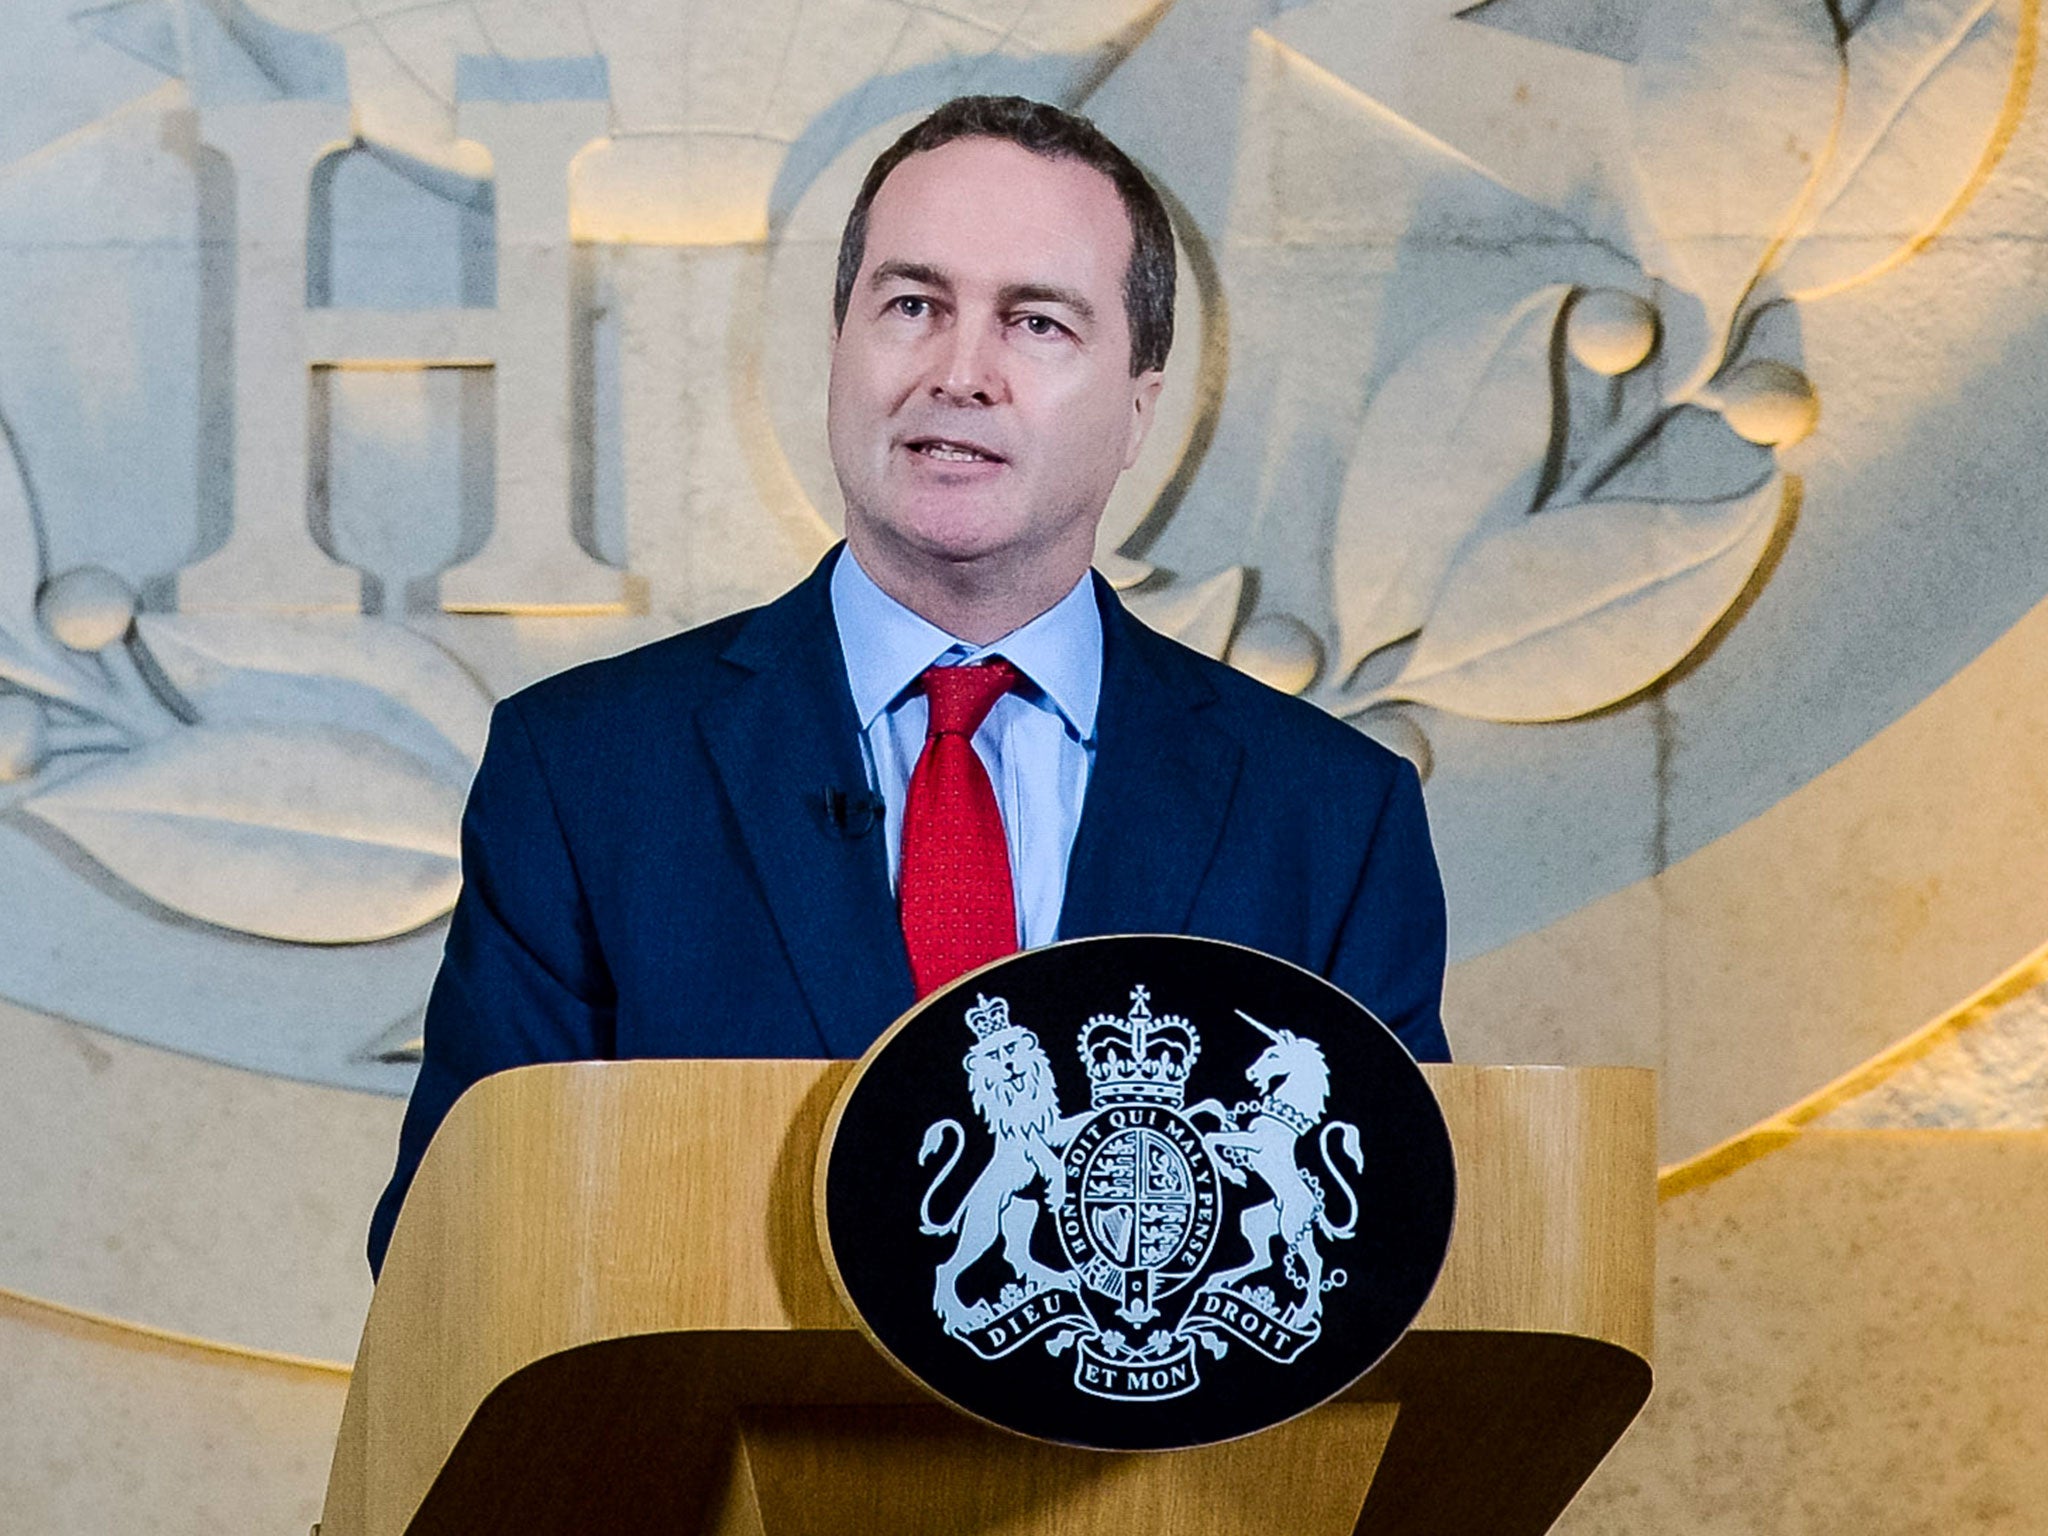 Director of GCHQ Robert Hannigan delivers a speech on November 17, 2015 in Cheltenham